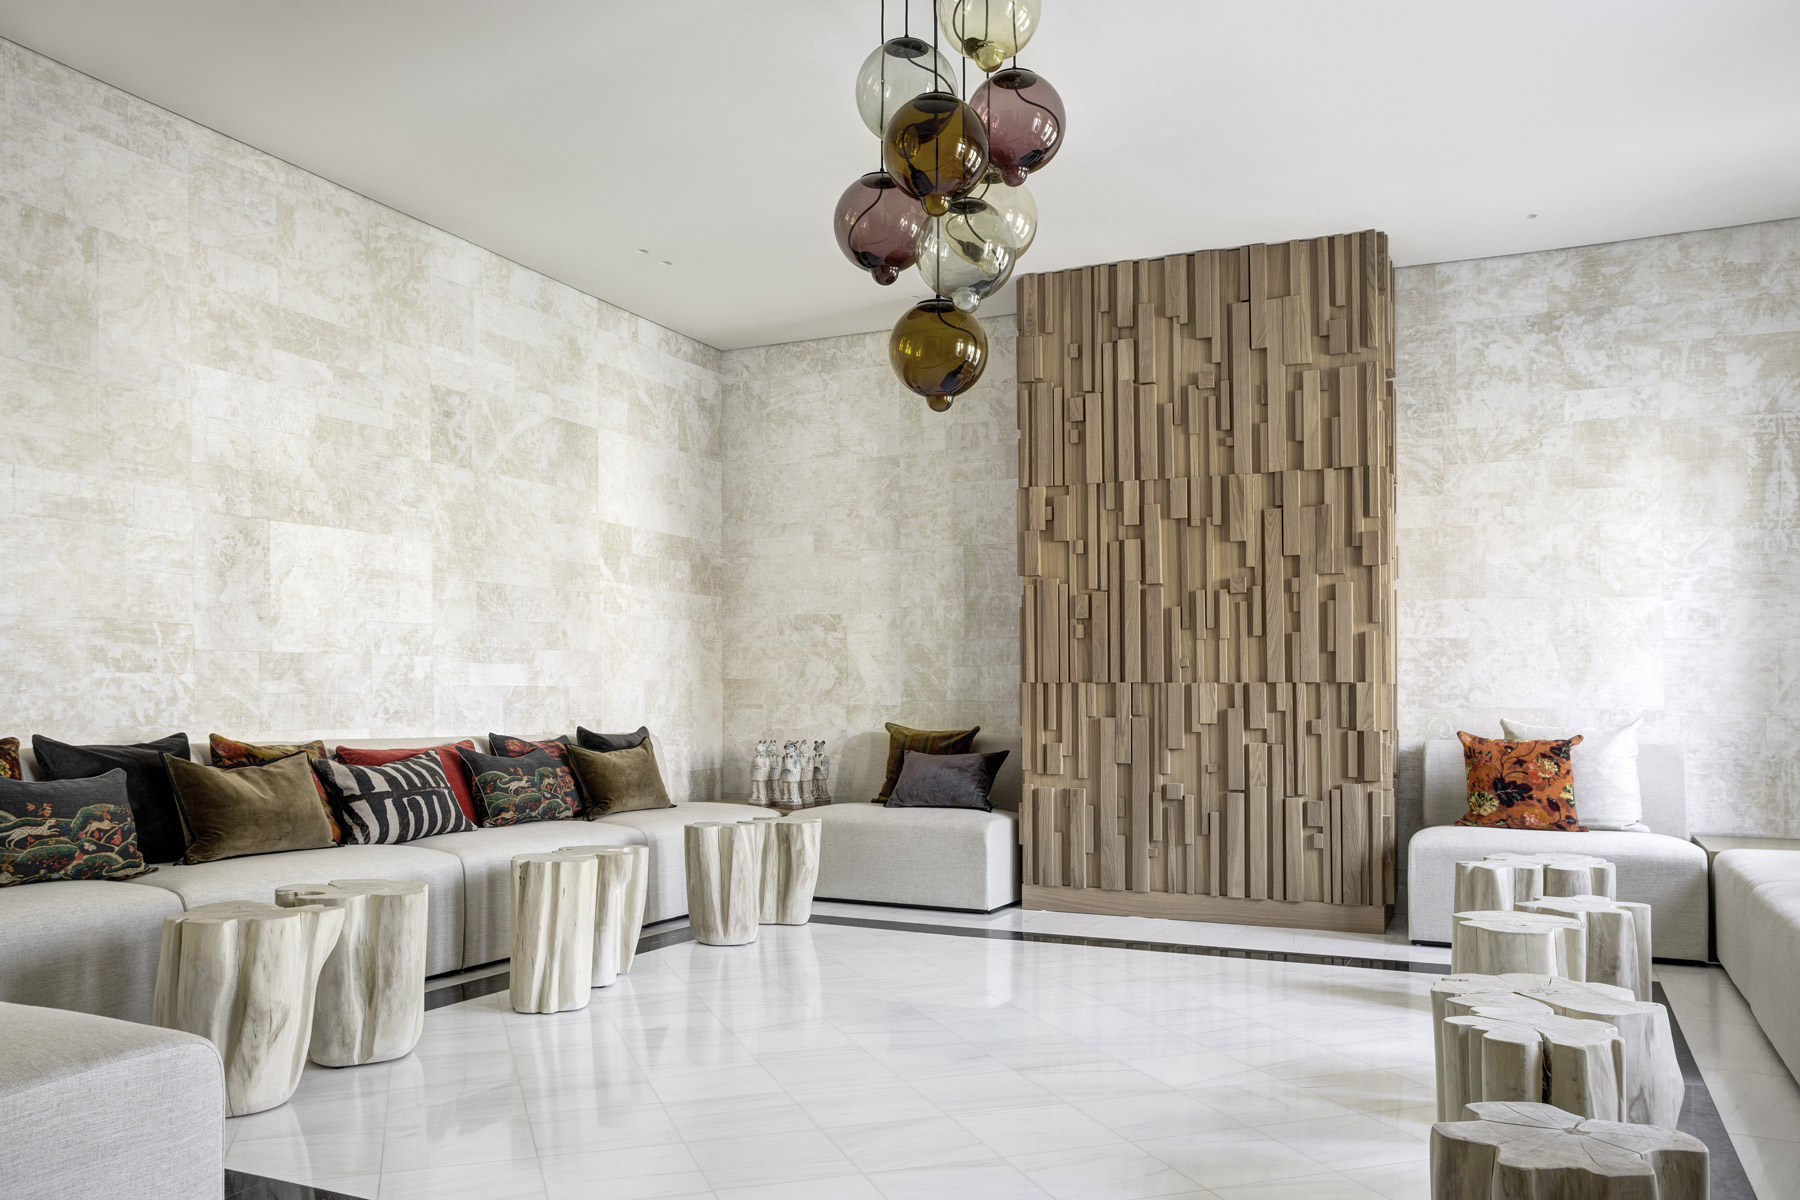 Luxury Residence Designed by VSHD Boasts Mid-Century Lighting